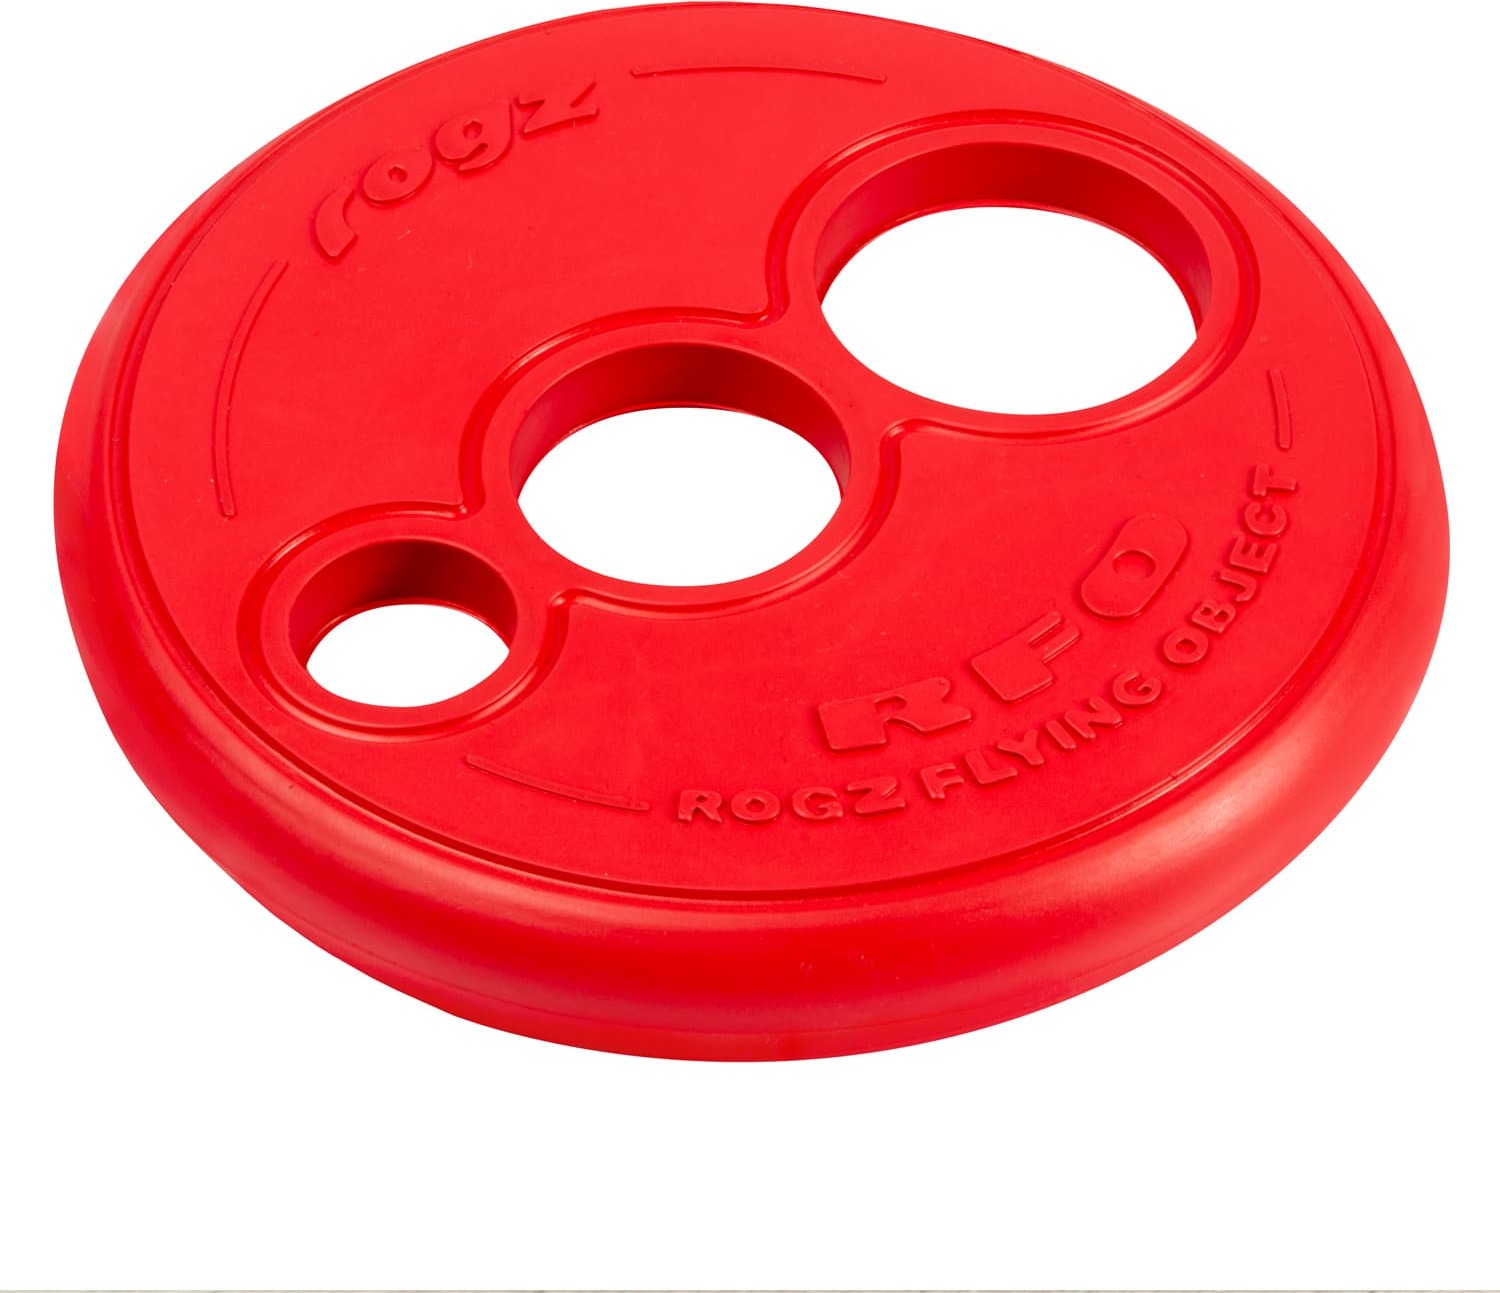 Rogz RFO frisbee pentru câini - zoom